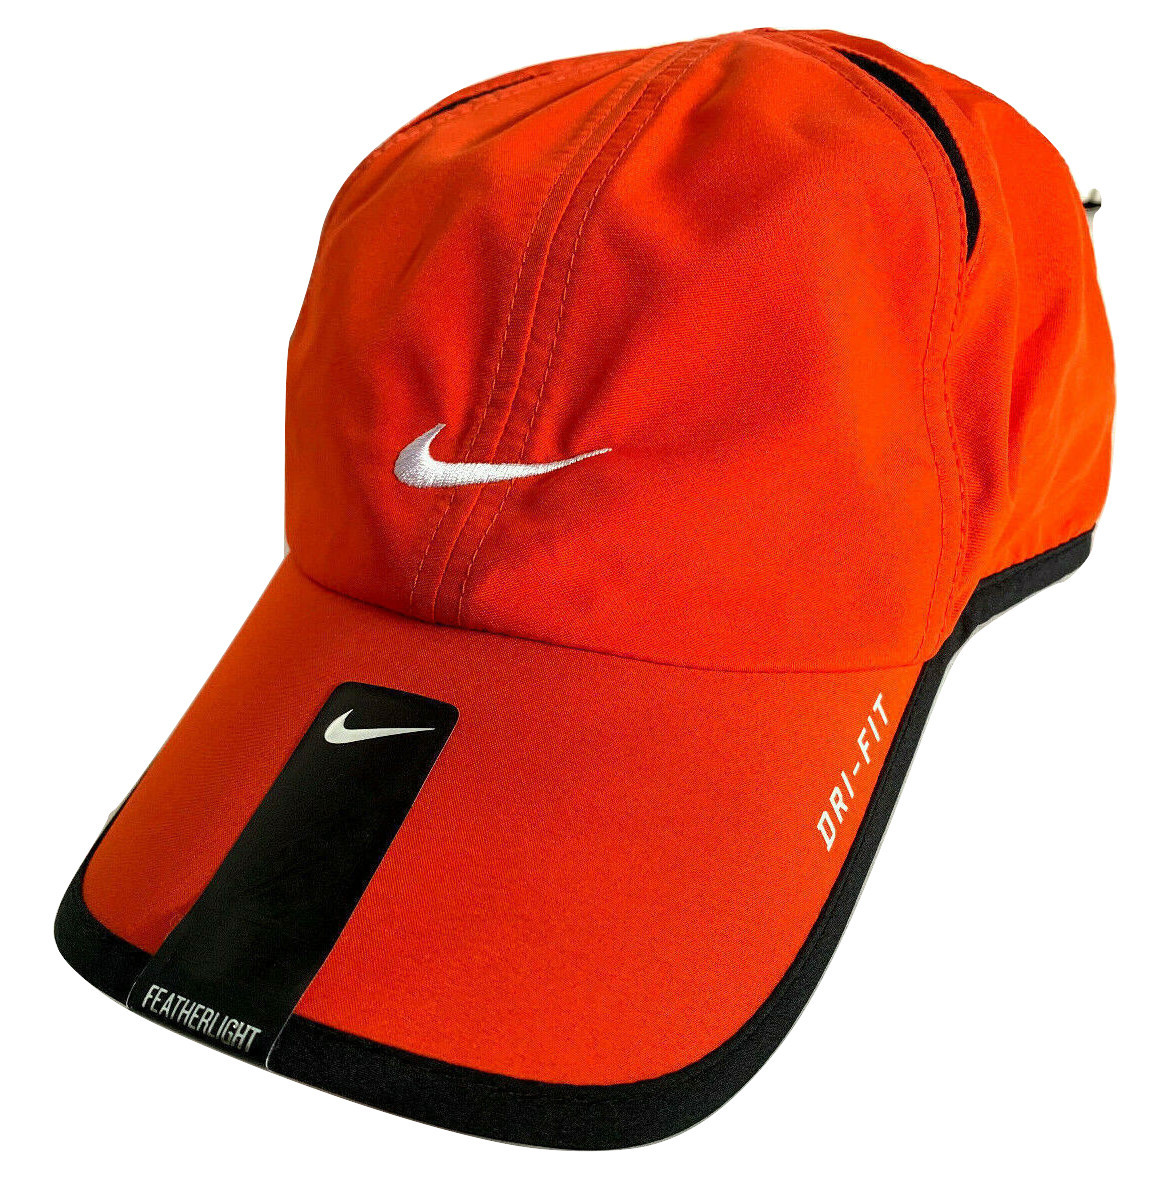 Regelmatigheid smokkel volleybal NEW! NIKE Adult Unisex FEATHERLIGHT DRI-FIT Tennis Cap/Hat-Max Orange  20465425 – VALLEYSPORTING